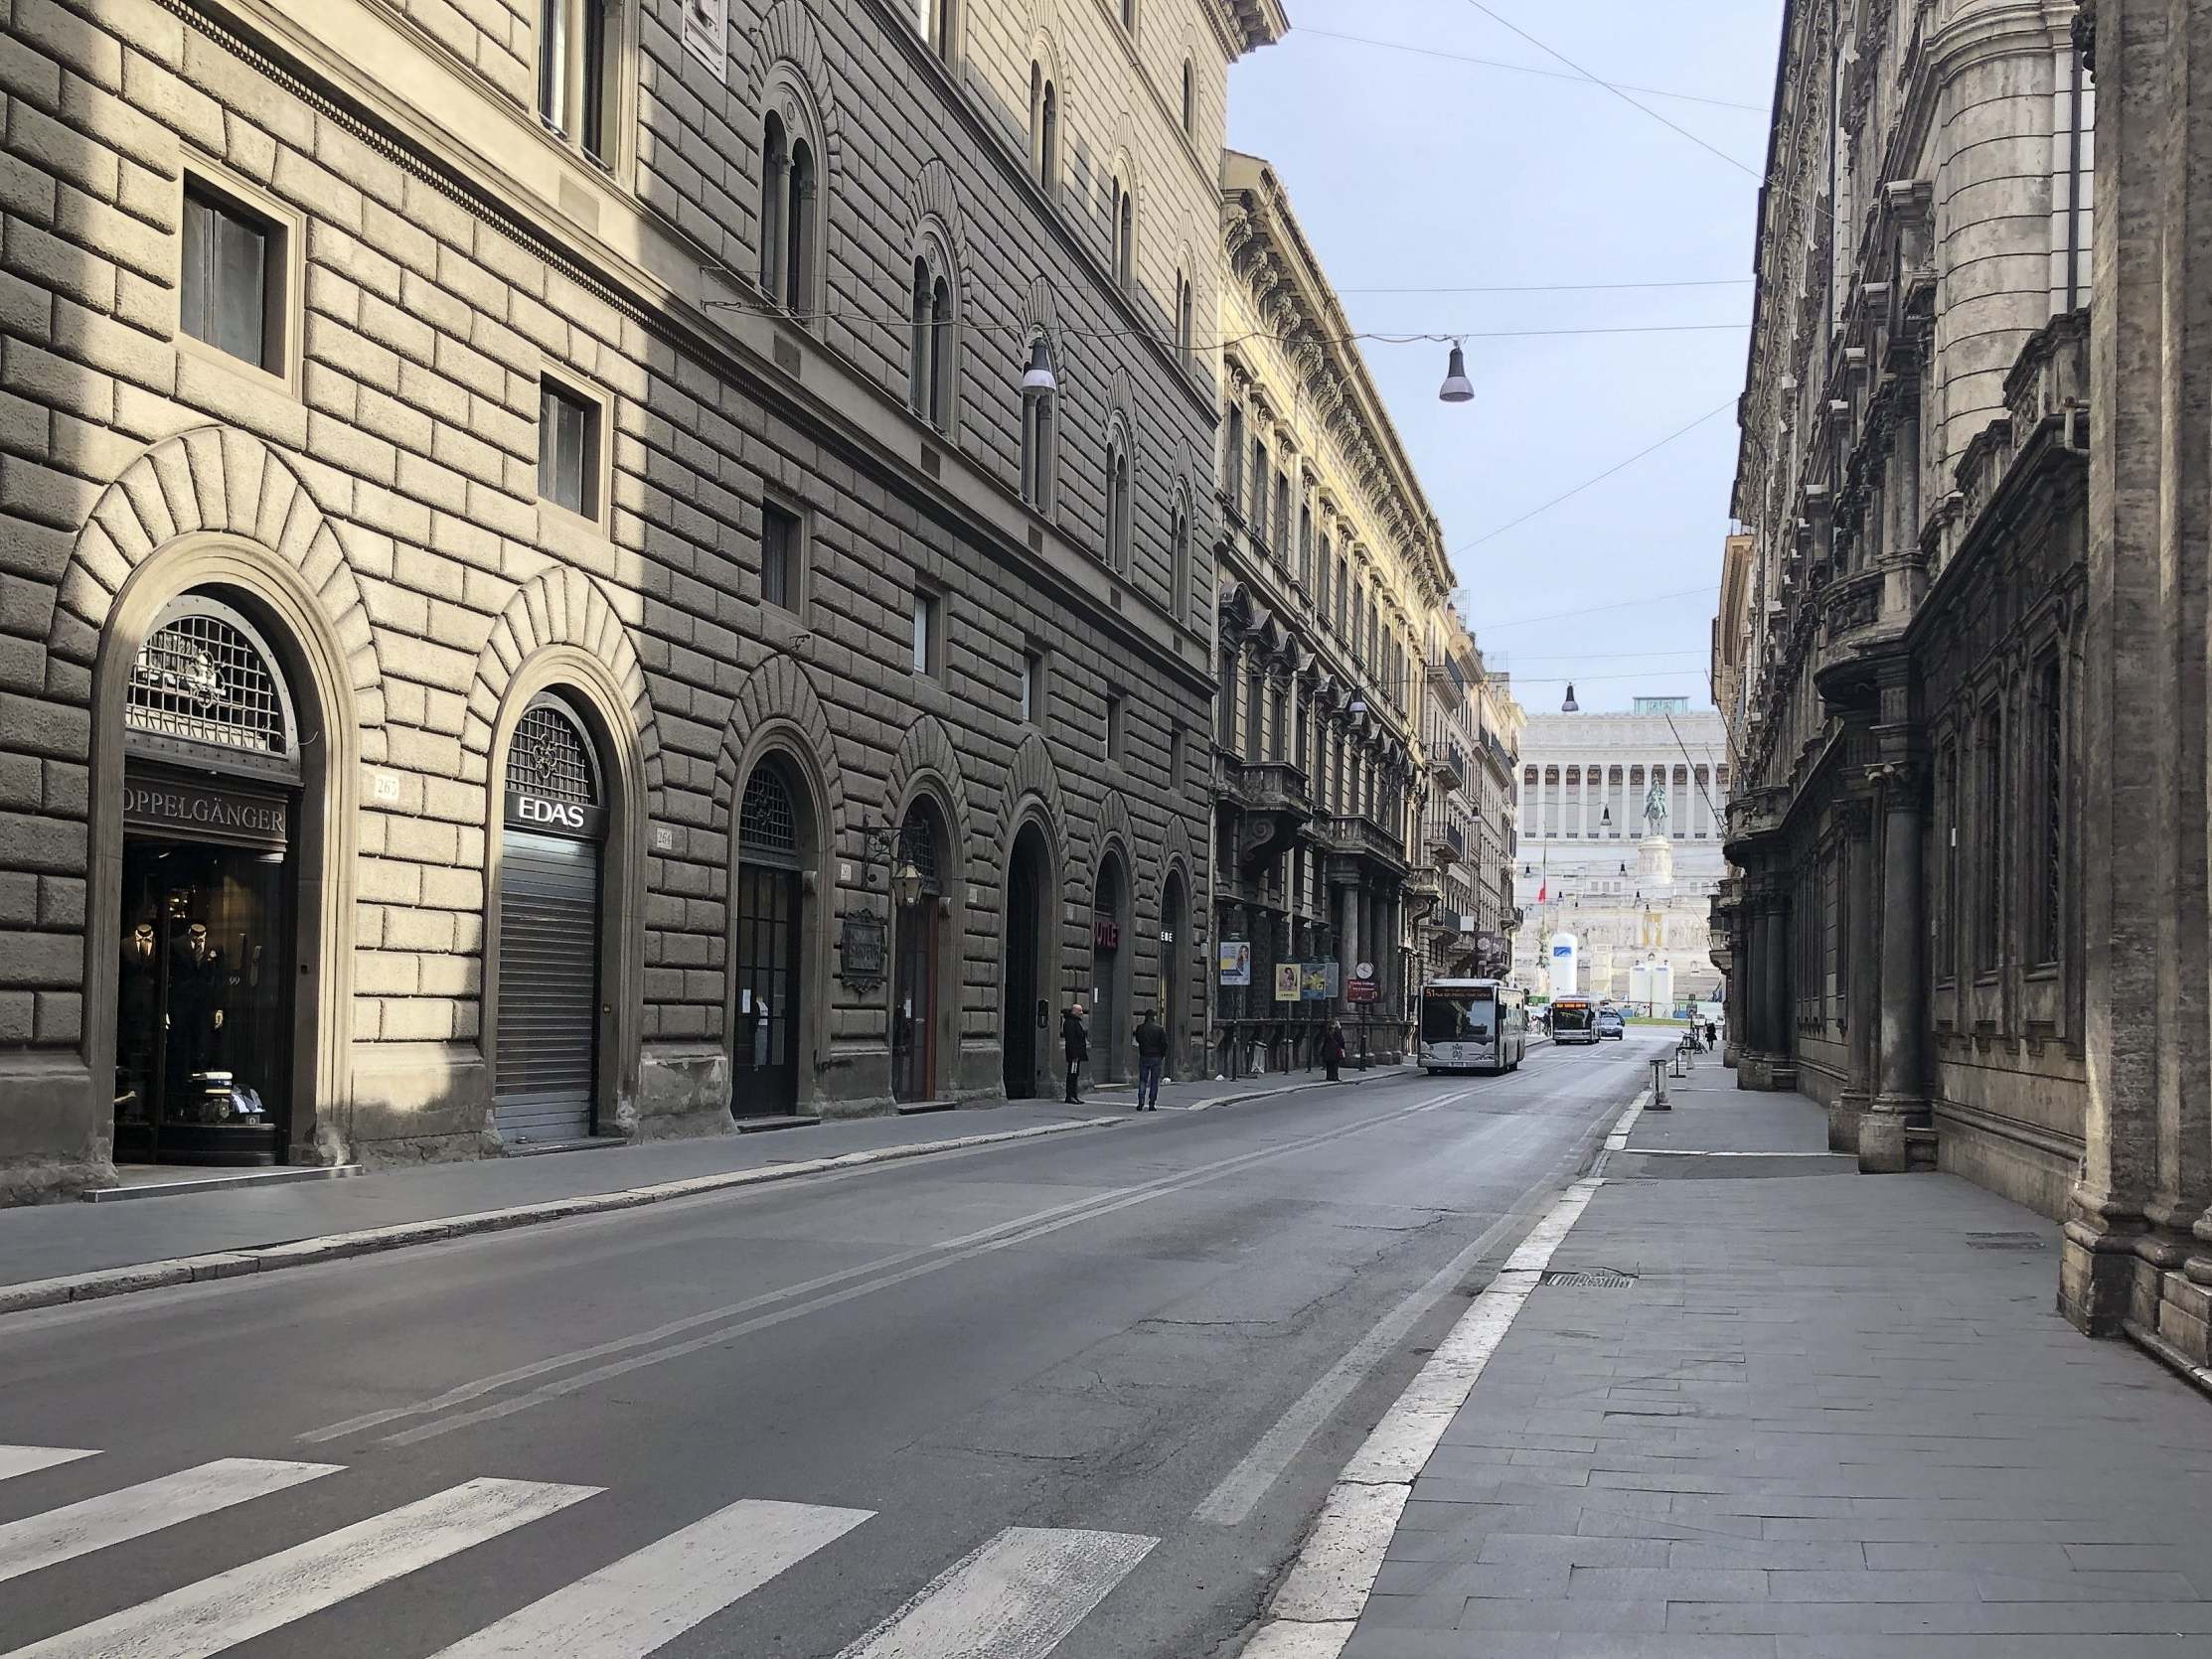 The empty streets of Italy due to the coronavirus